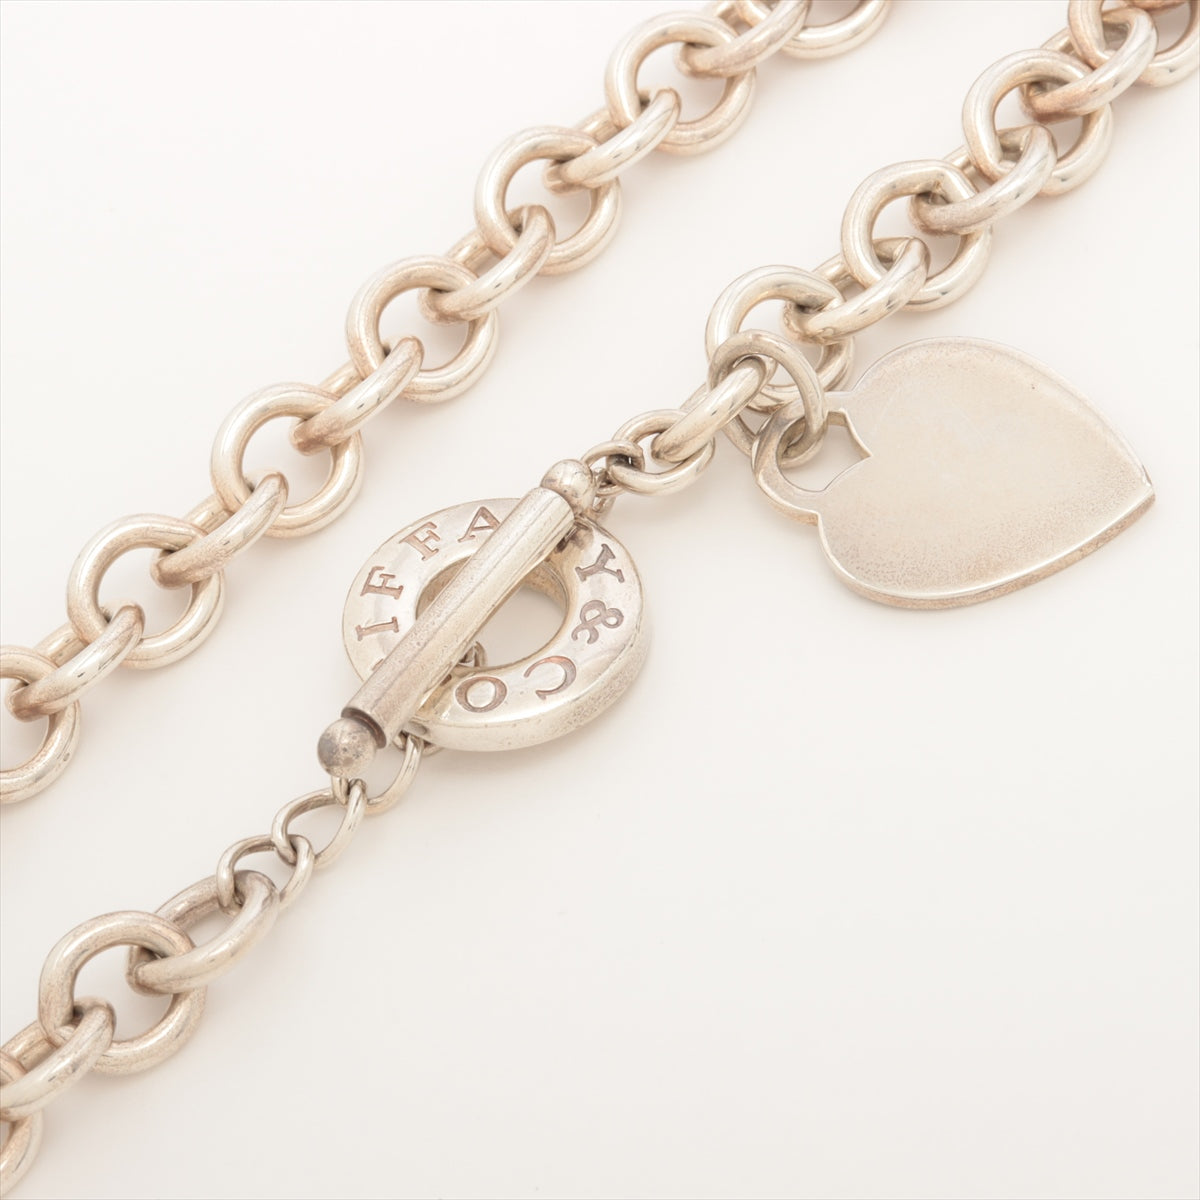 Tiffany Return To Tiffany Heart Tag Necklace 925 76.8g Silver